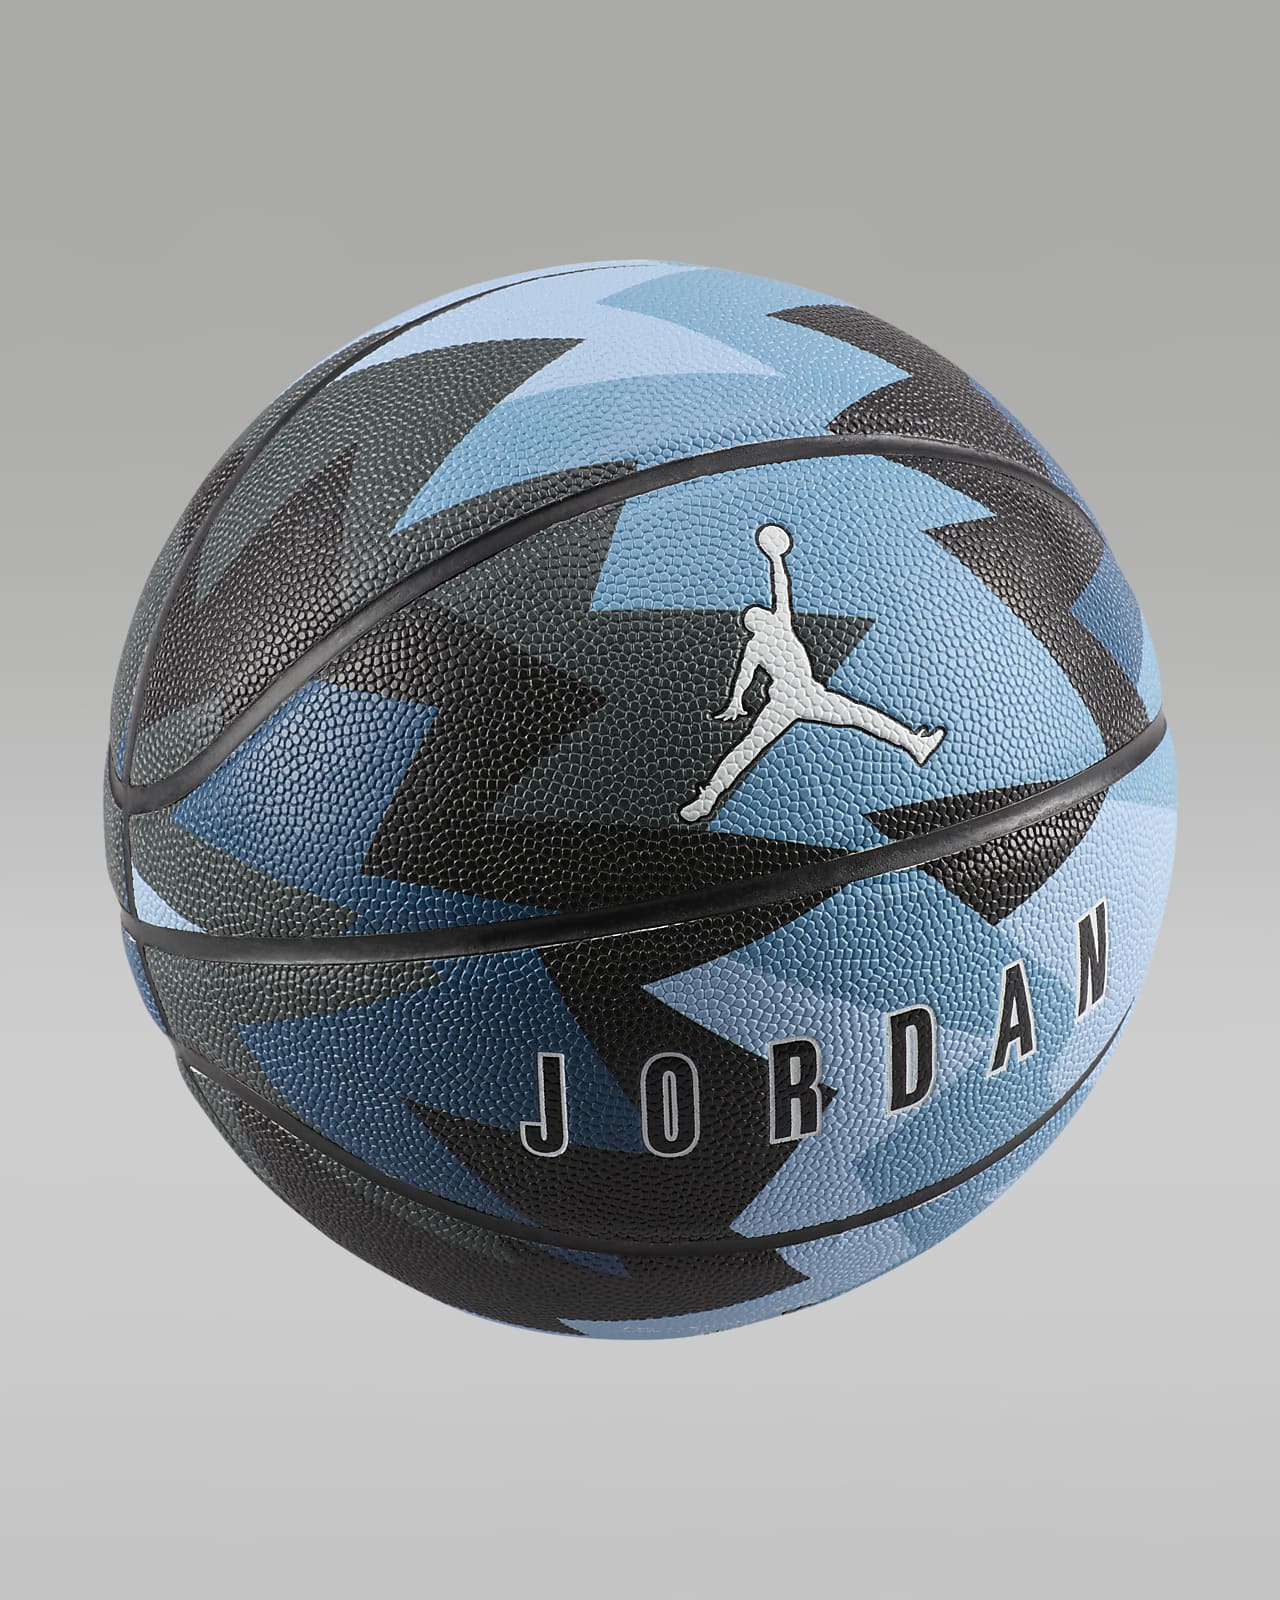 Basketboll Jordan 8P (ouppblåst)